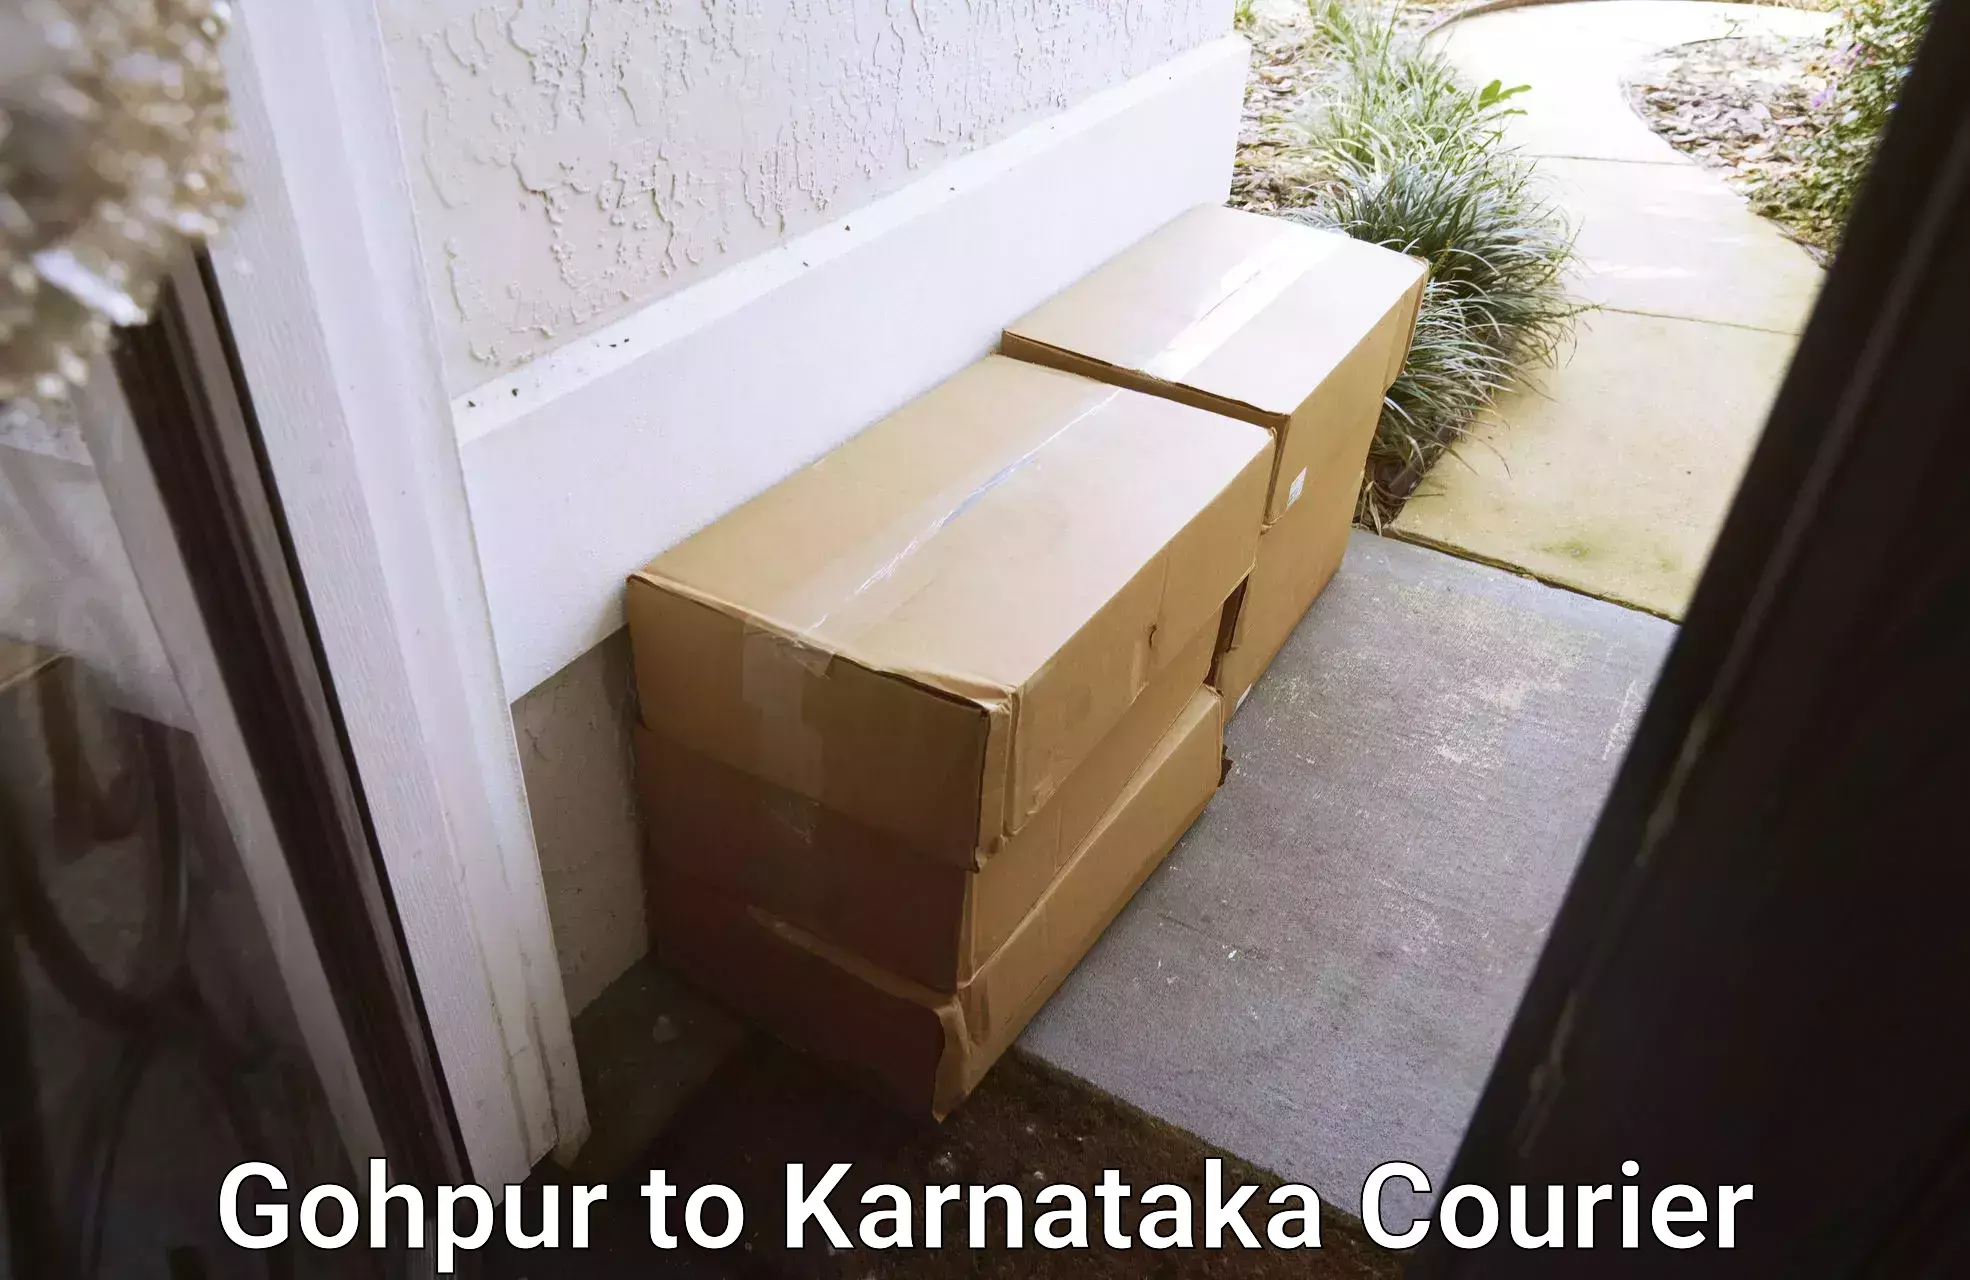 Online package tracking Gohpur to Karnataka